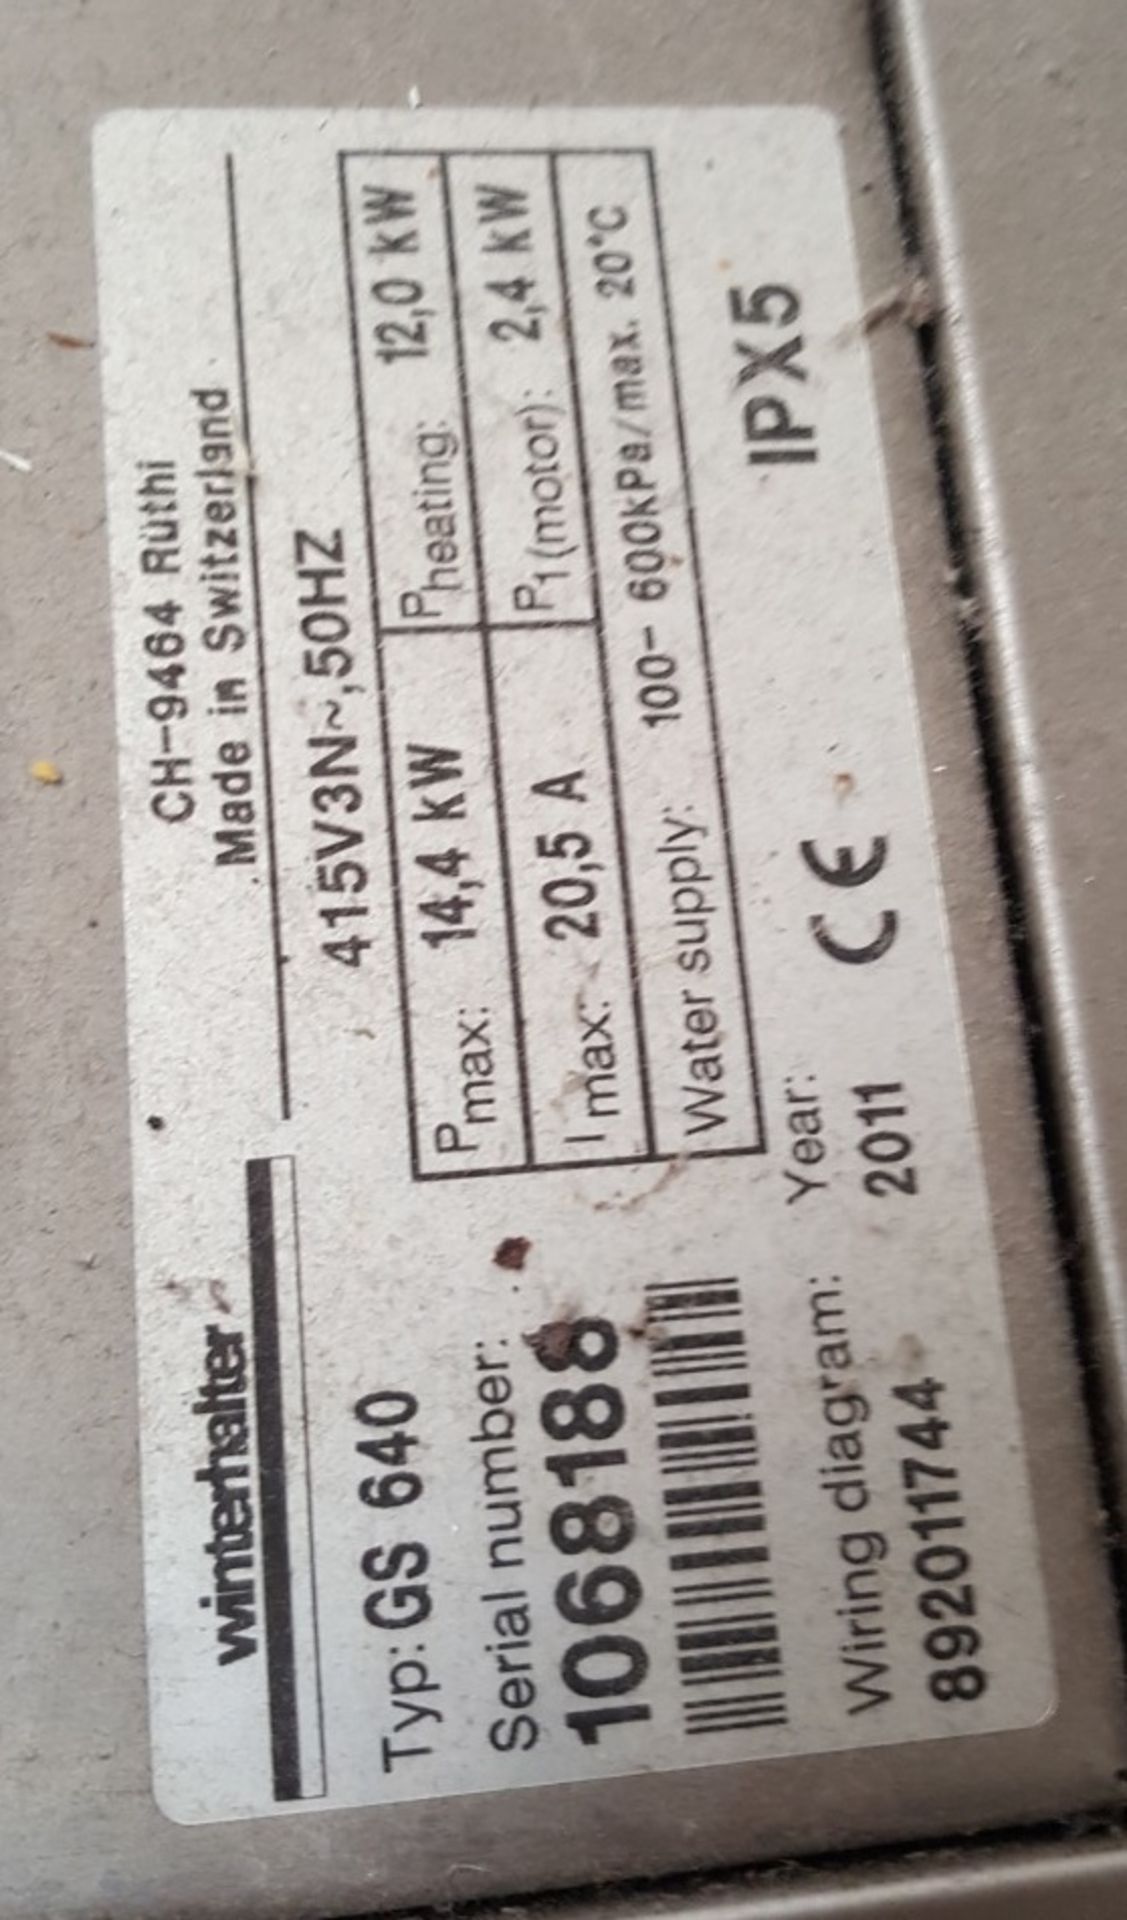 1 x WINTERHALTER GS 640 Single Utensil Dishwasher - CL455 - Ref CBU8 - Location: Altrincham WA14 - Image 11 of 11